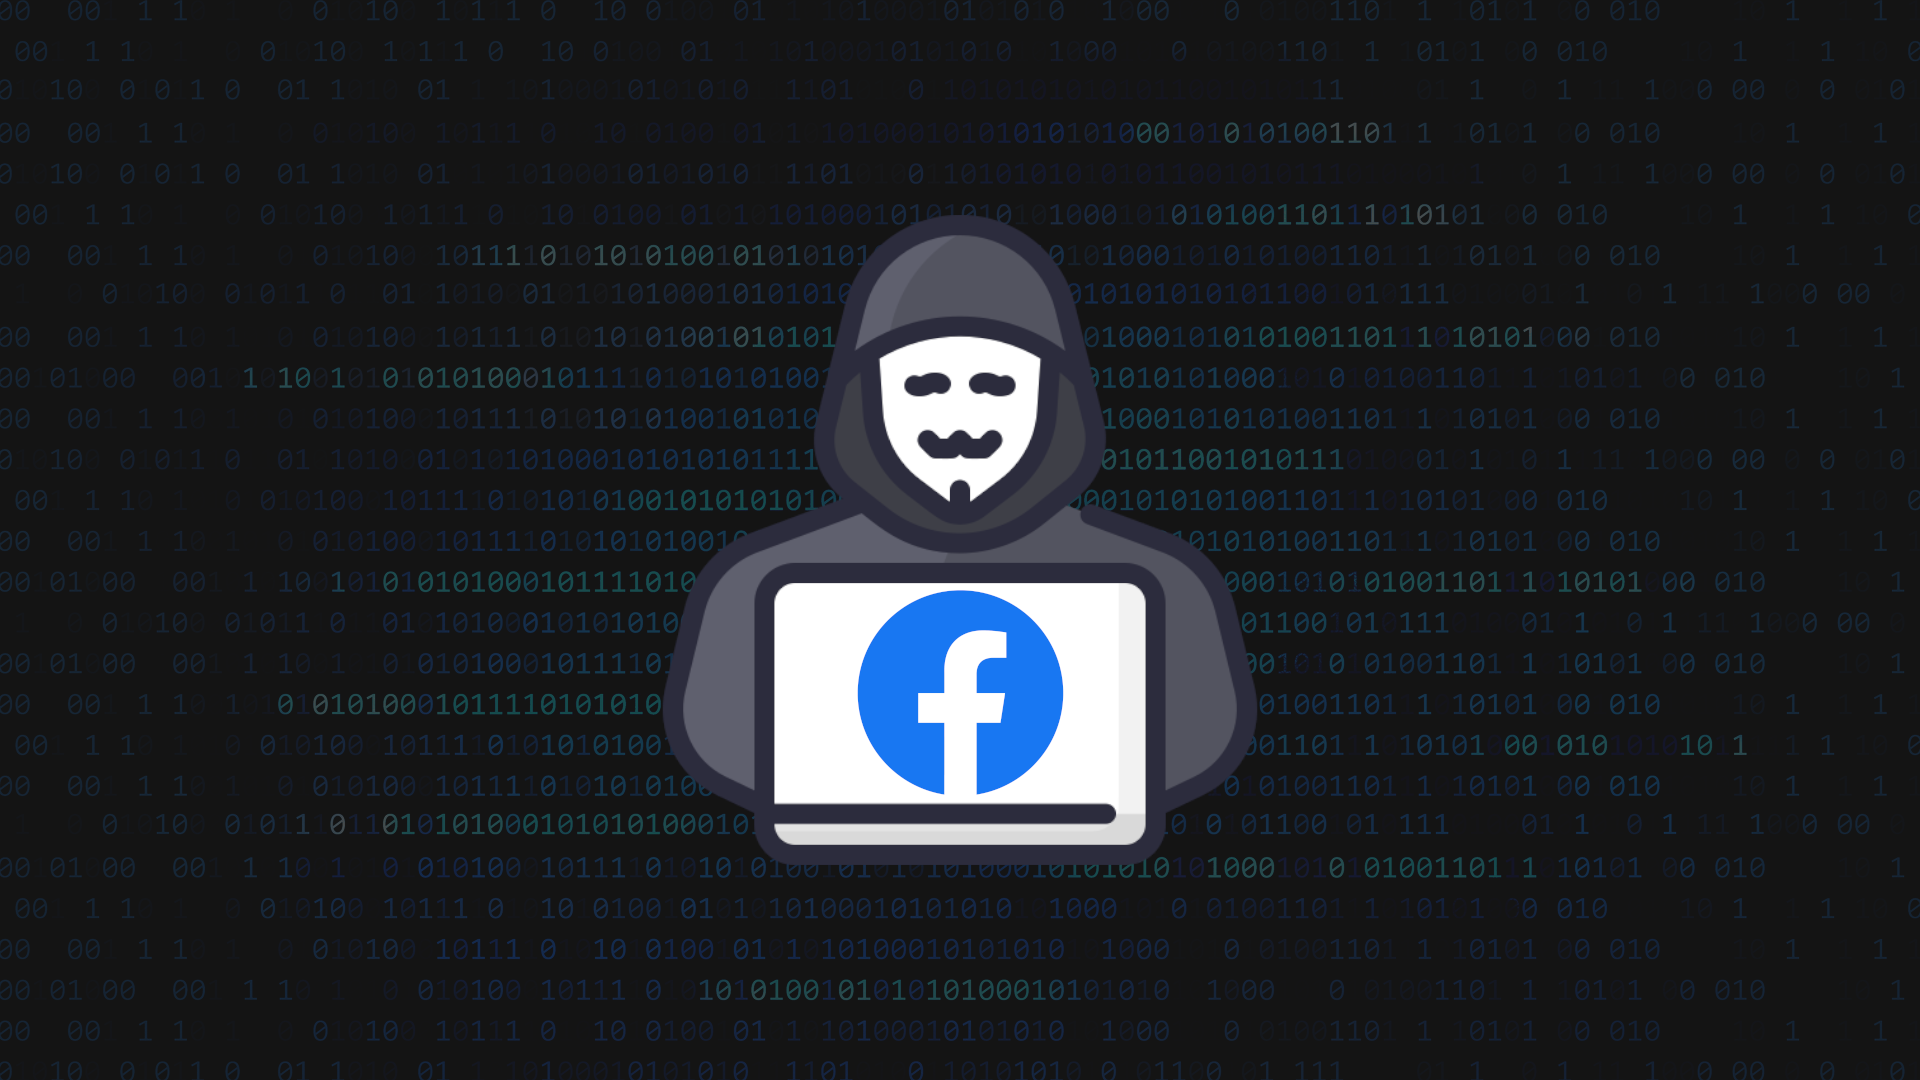 Facebook hackeado? Veja dicas para recuperar e proteger sua conta